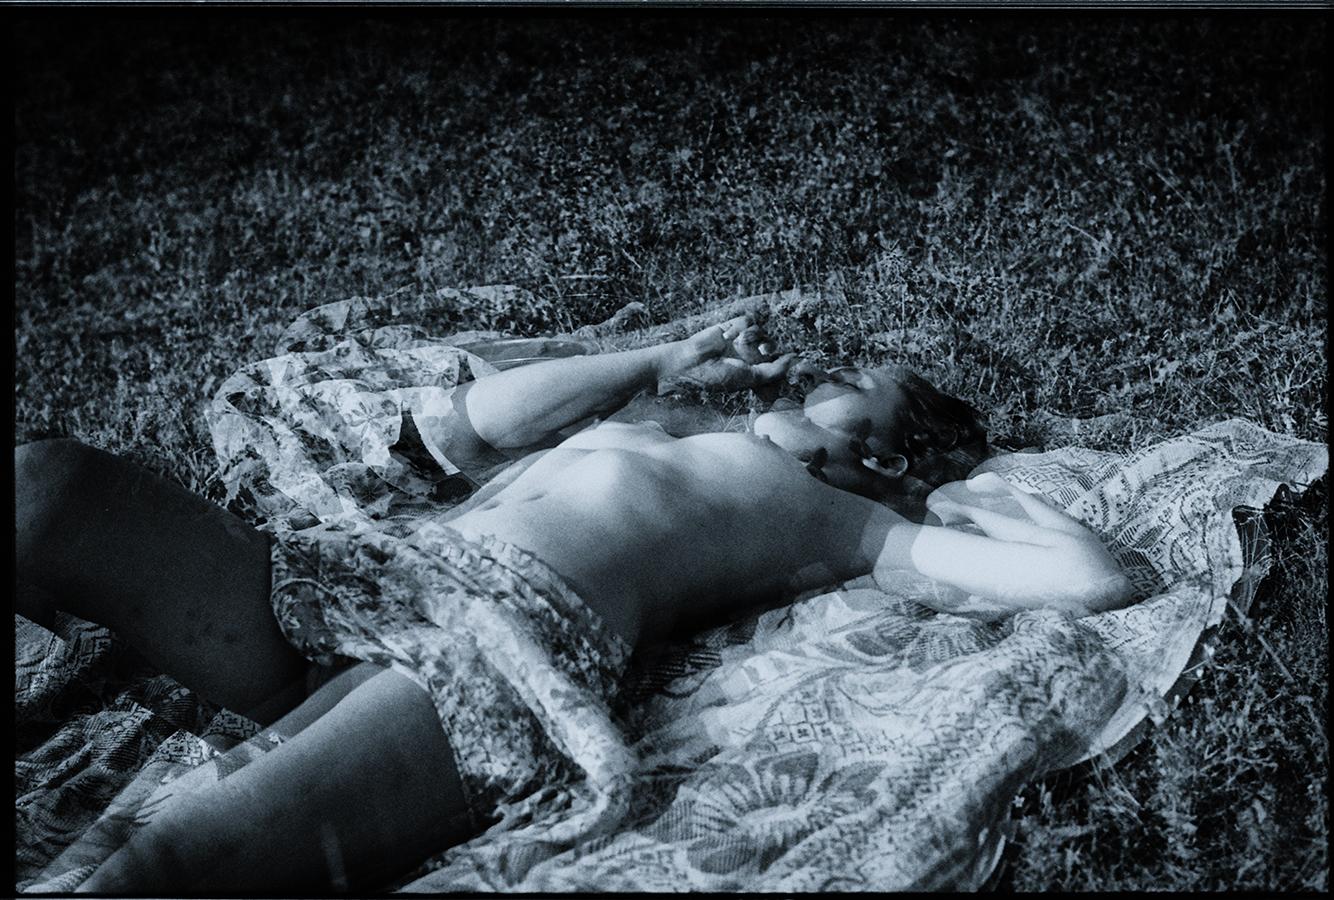 Sergey Melnitchenko Nude Photograph - 'When I Was A Virgin 13'  21st century female nude fine art photography